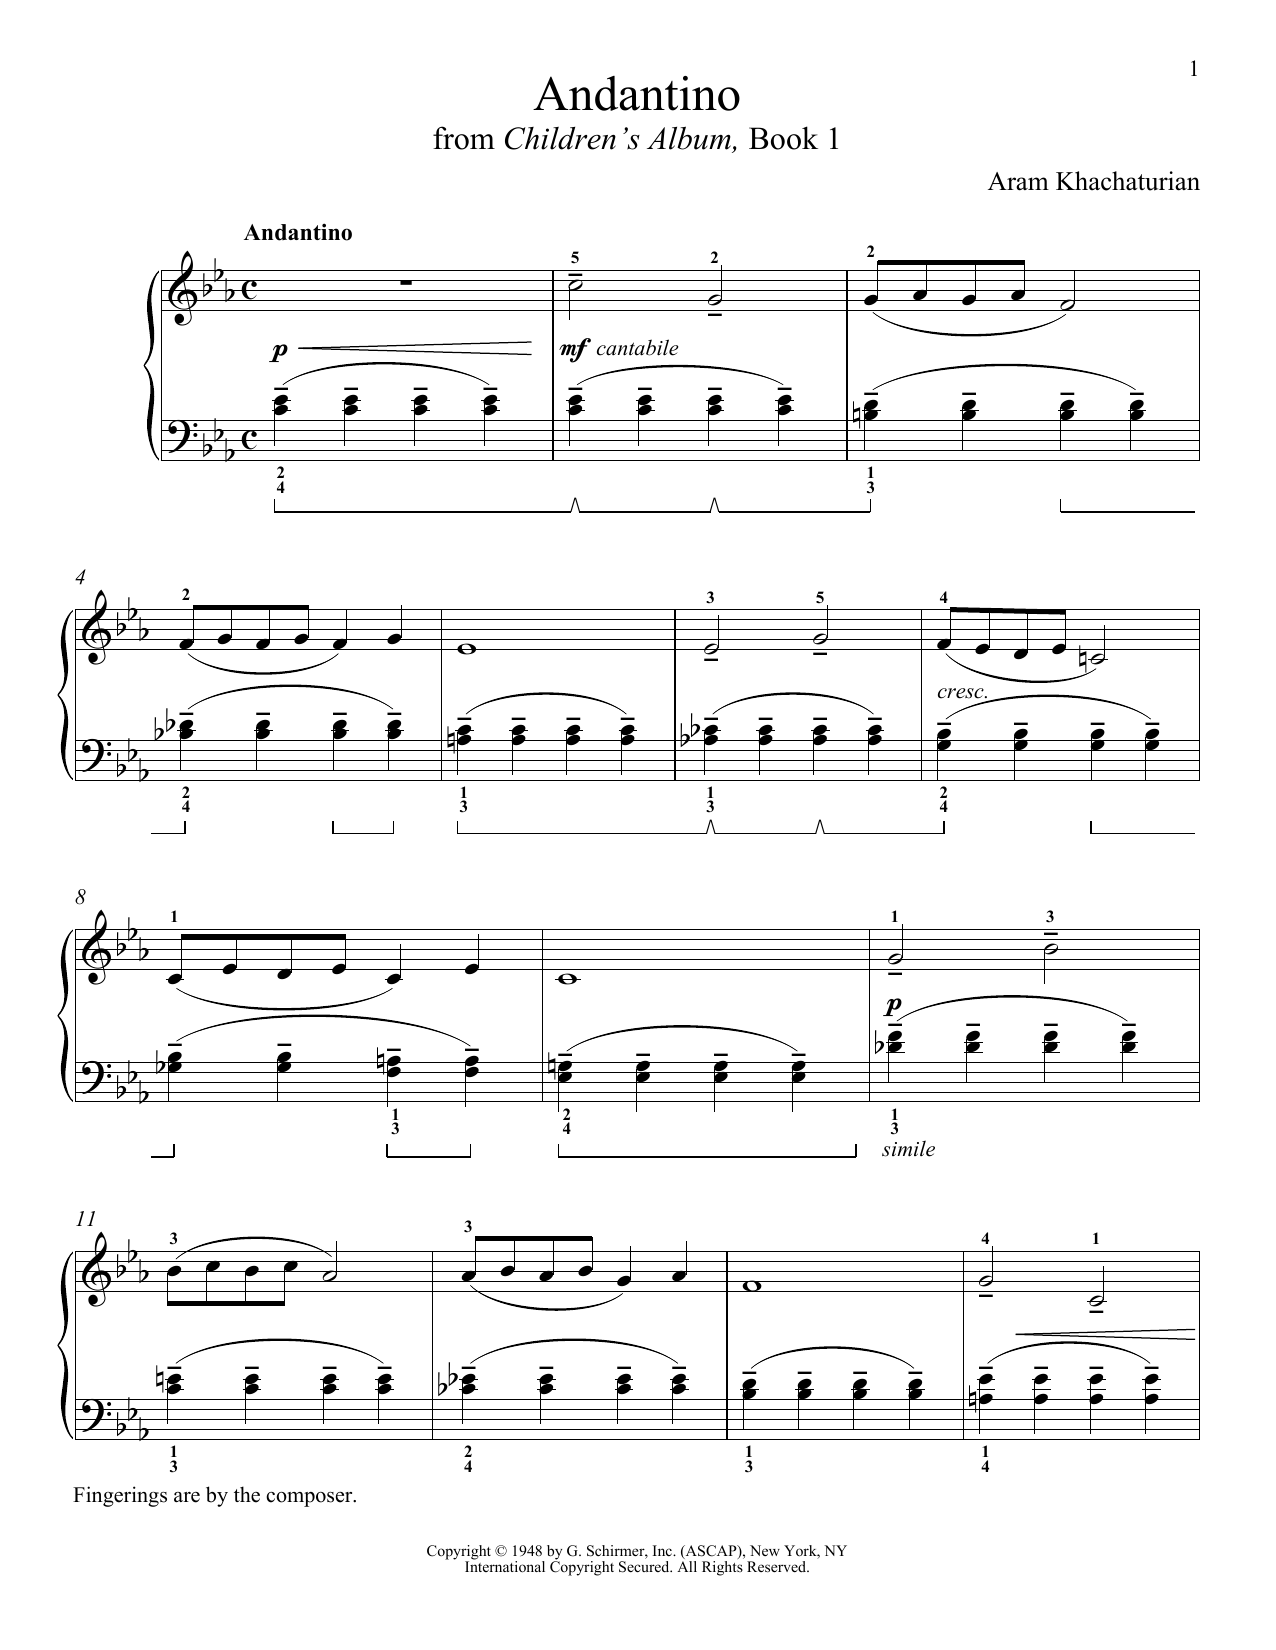 Aram Khachaturian Ivan Sings Sheet Music Notes & Chords for Piano - Download or Print PDF